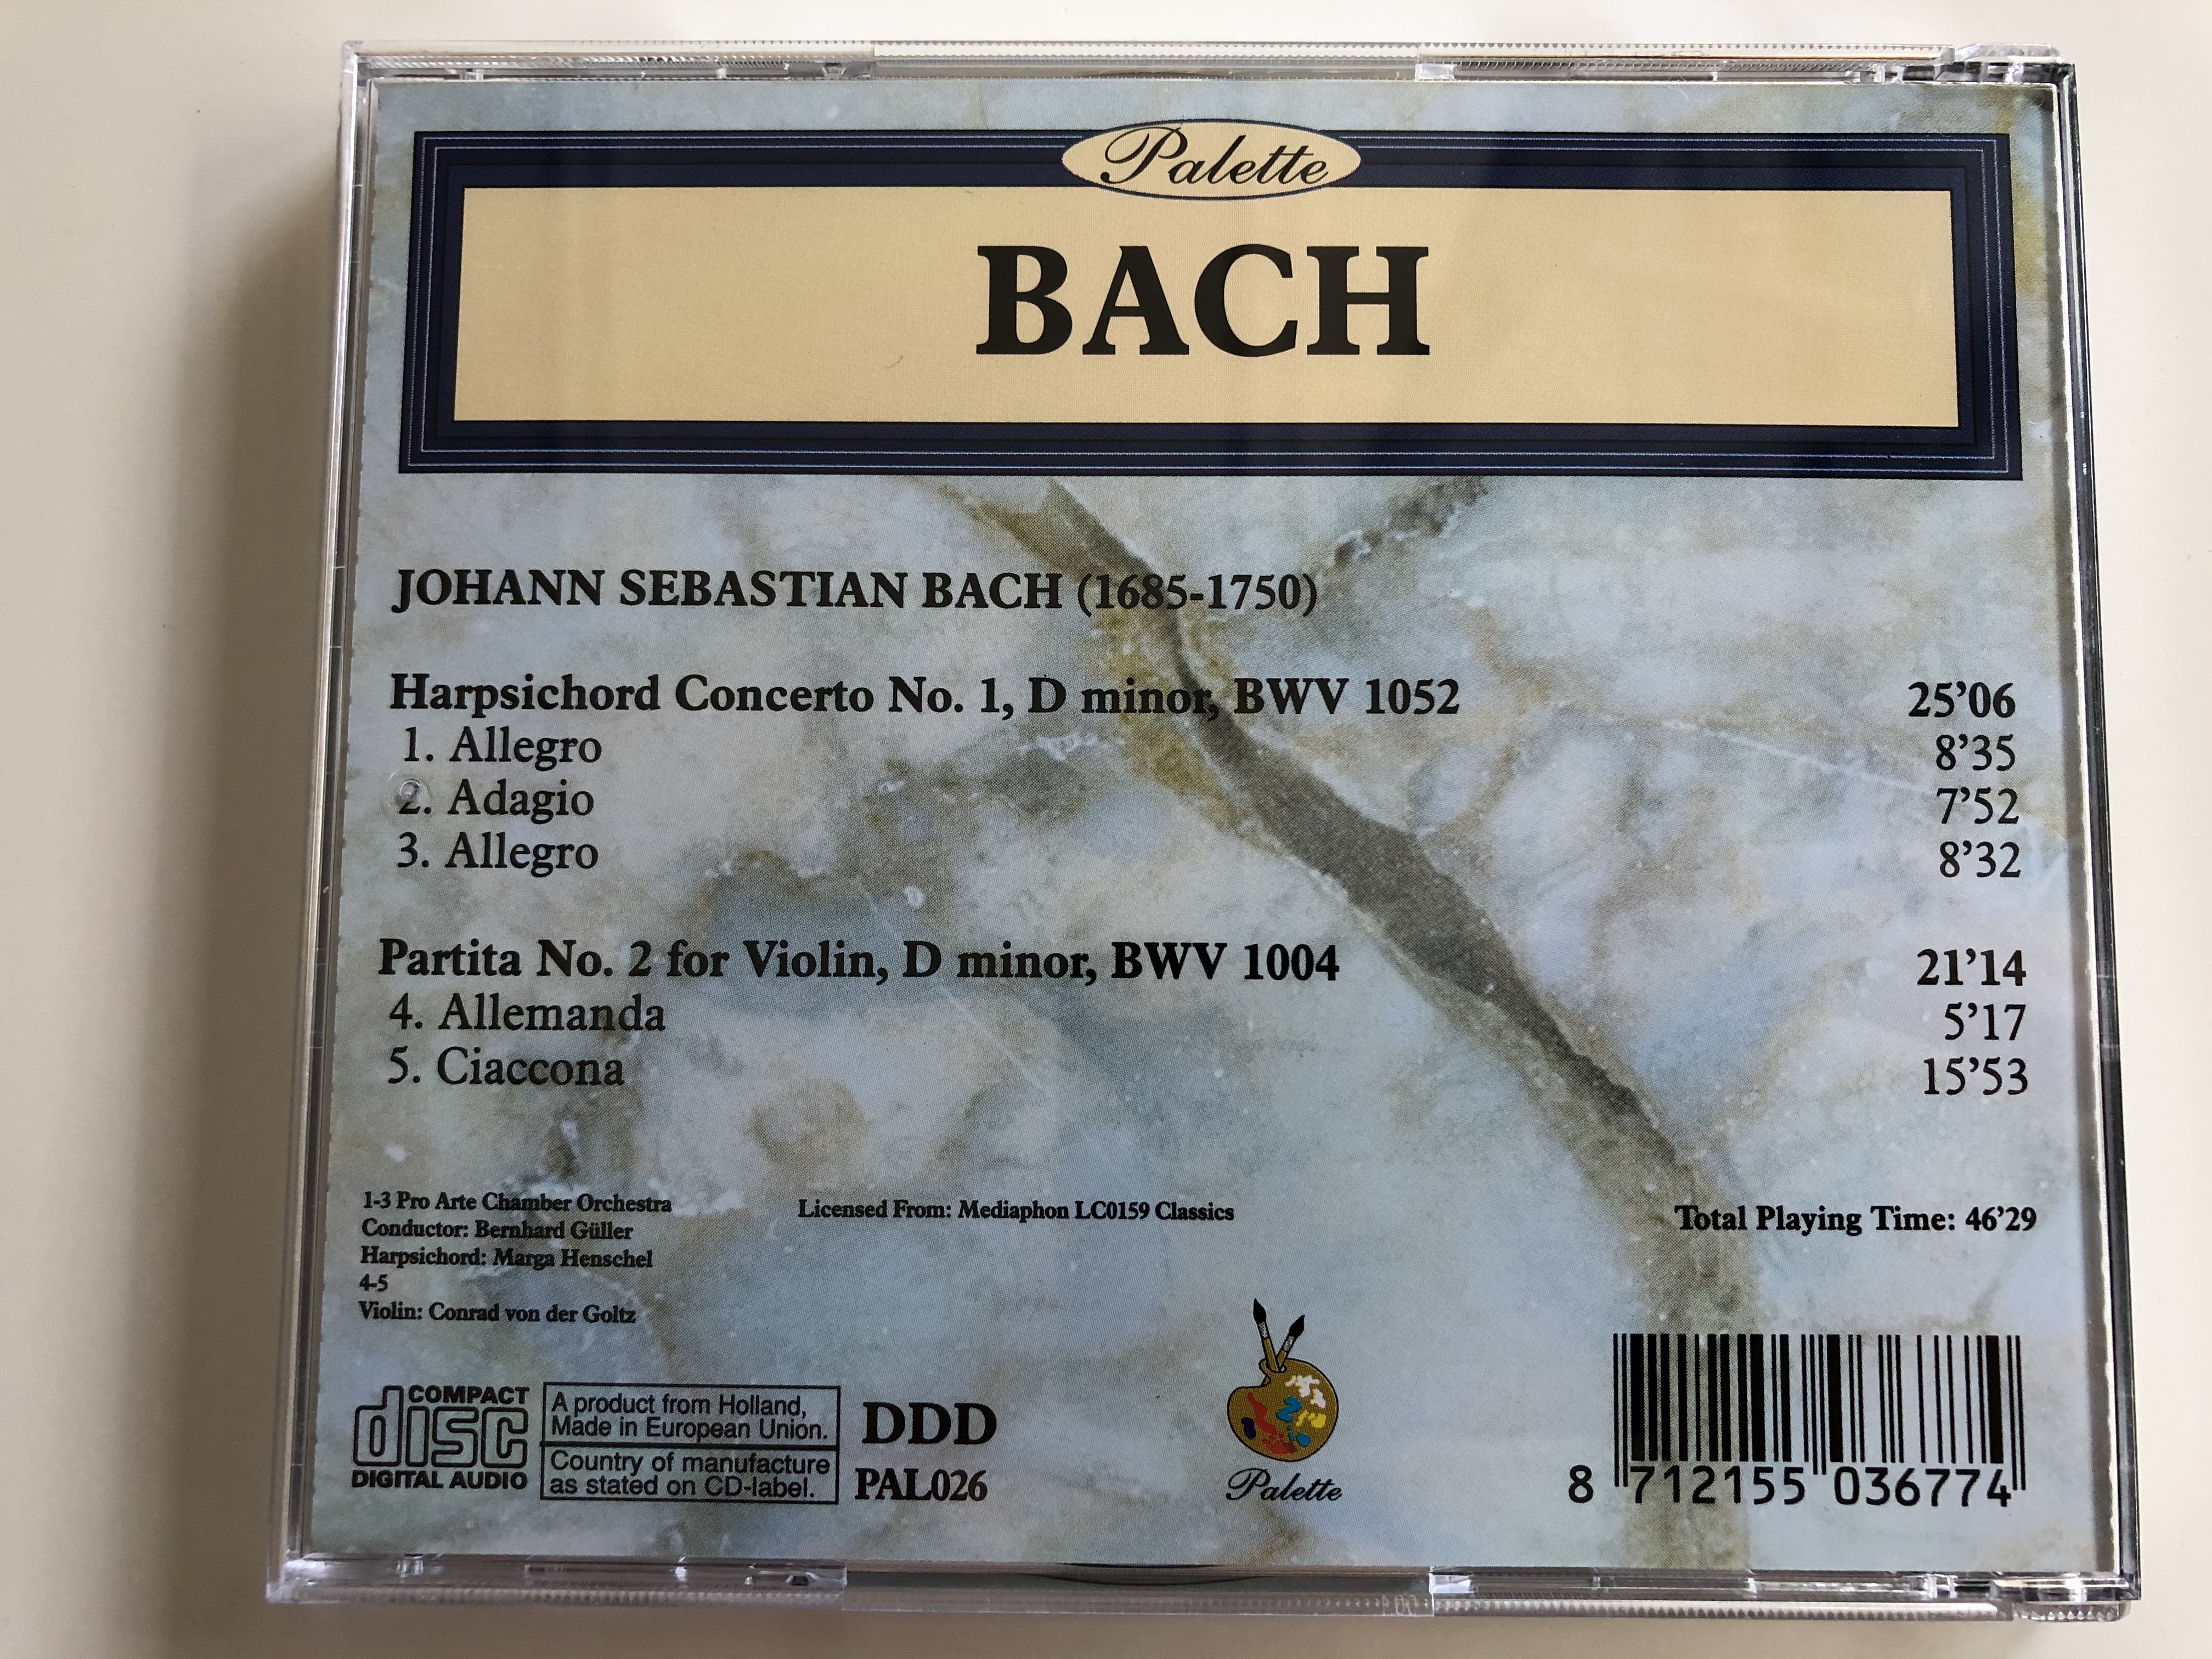 bach-harpsichord-concerto-nr.-1-partita-nr.-2-for-violin-palette-audio-cd-1996-pal026-4-.jpg